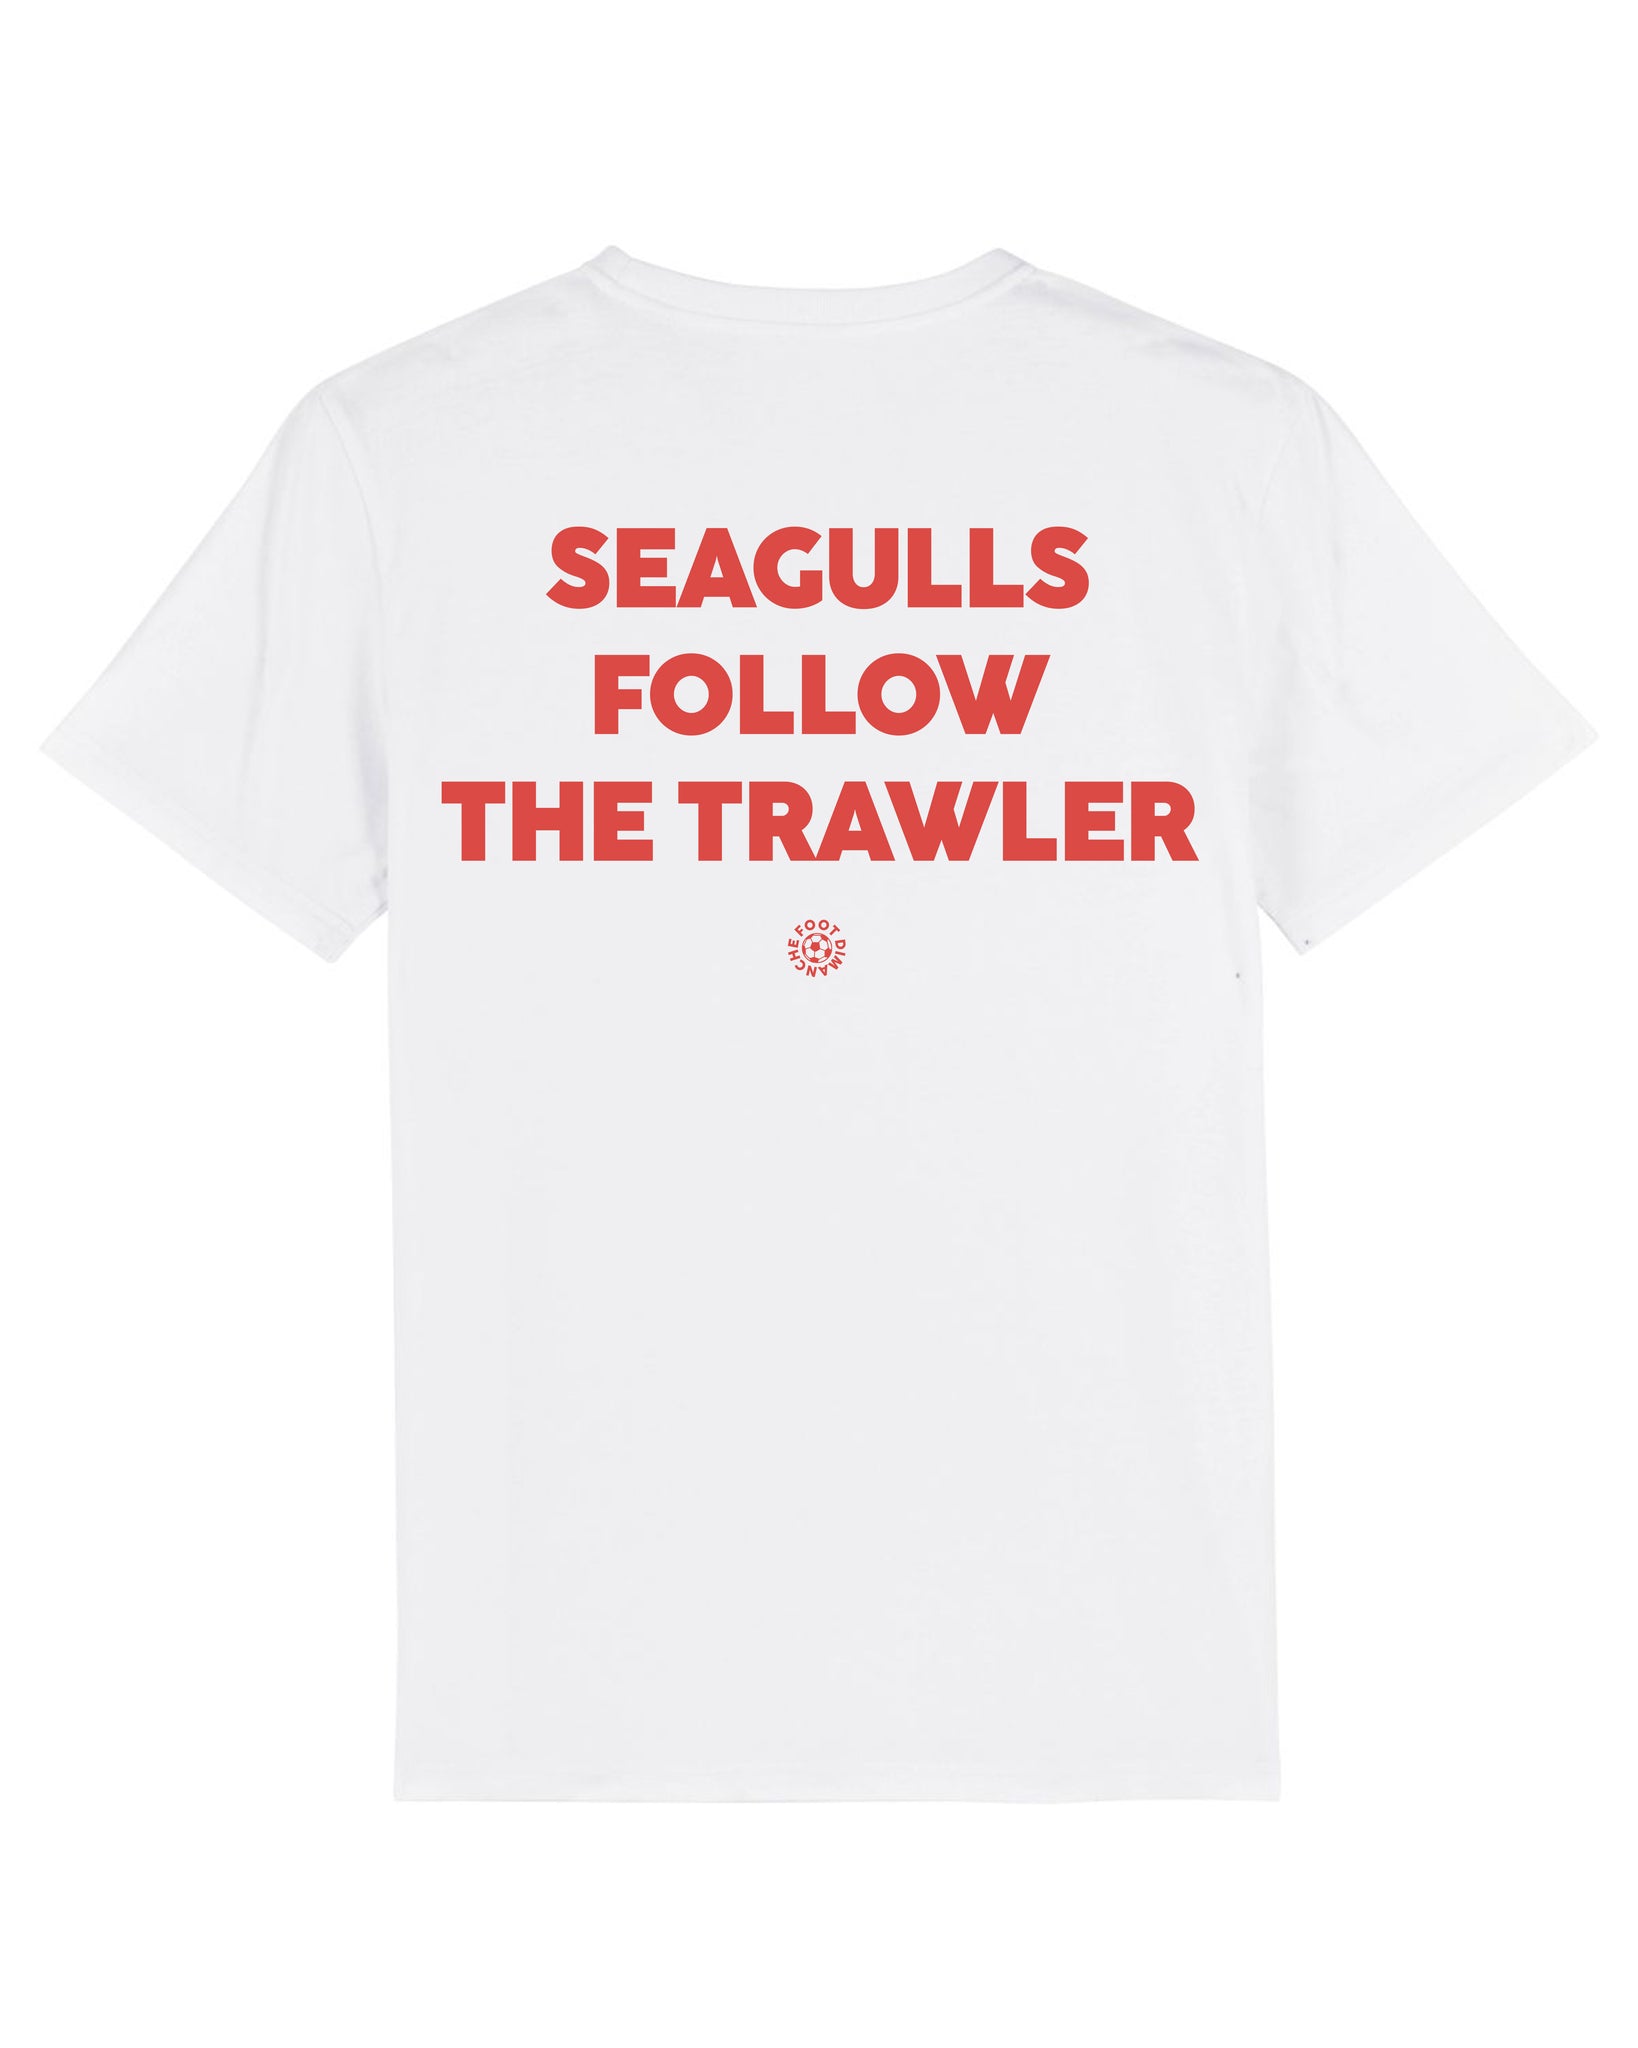 Tee Shirt Seagulls follow the trawler